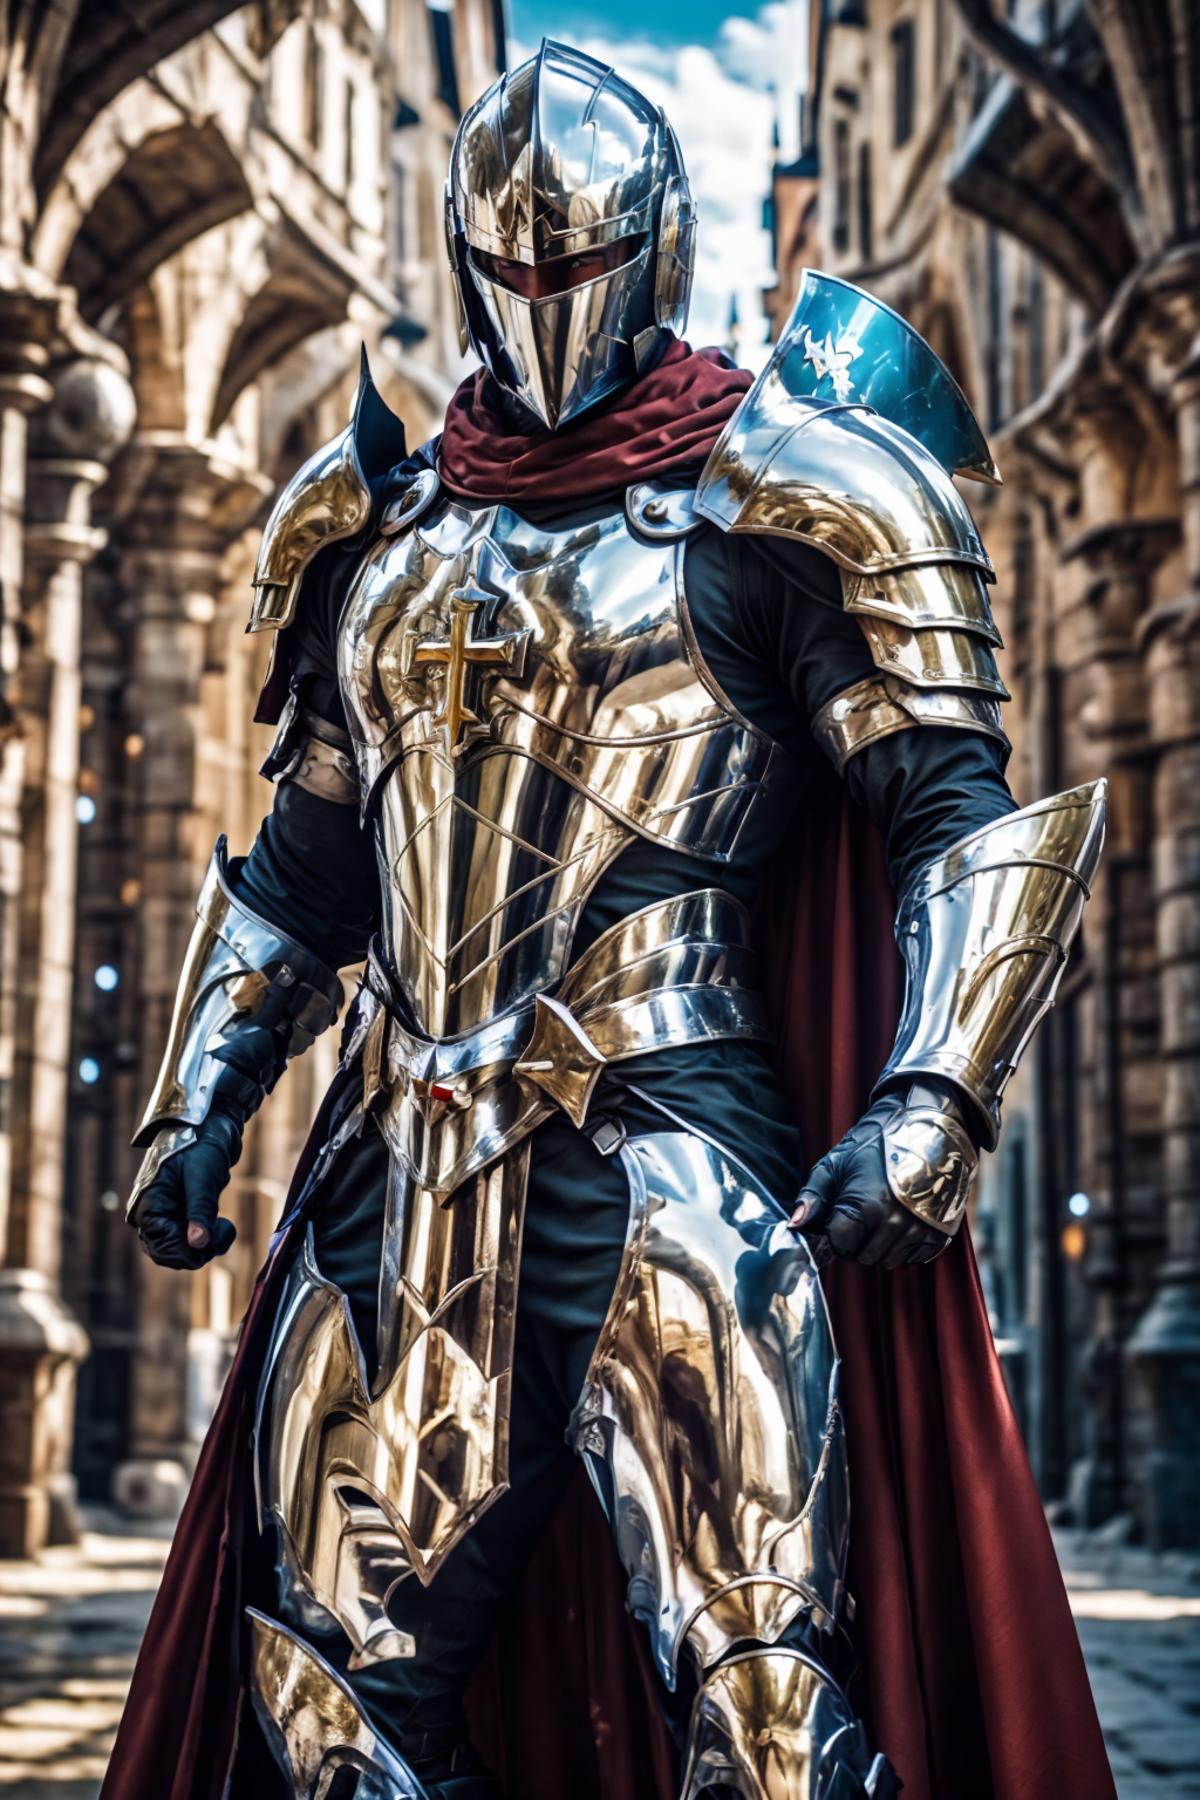 Chrome Armor image by Kairen92